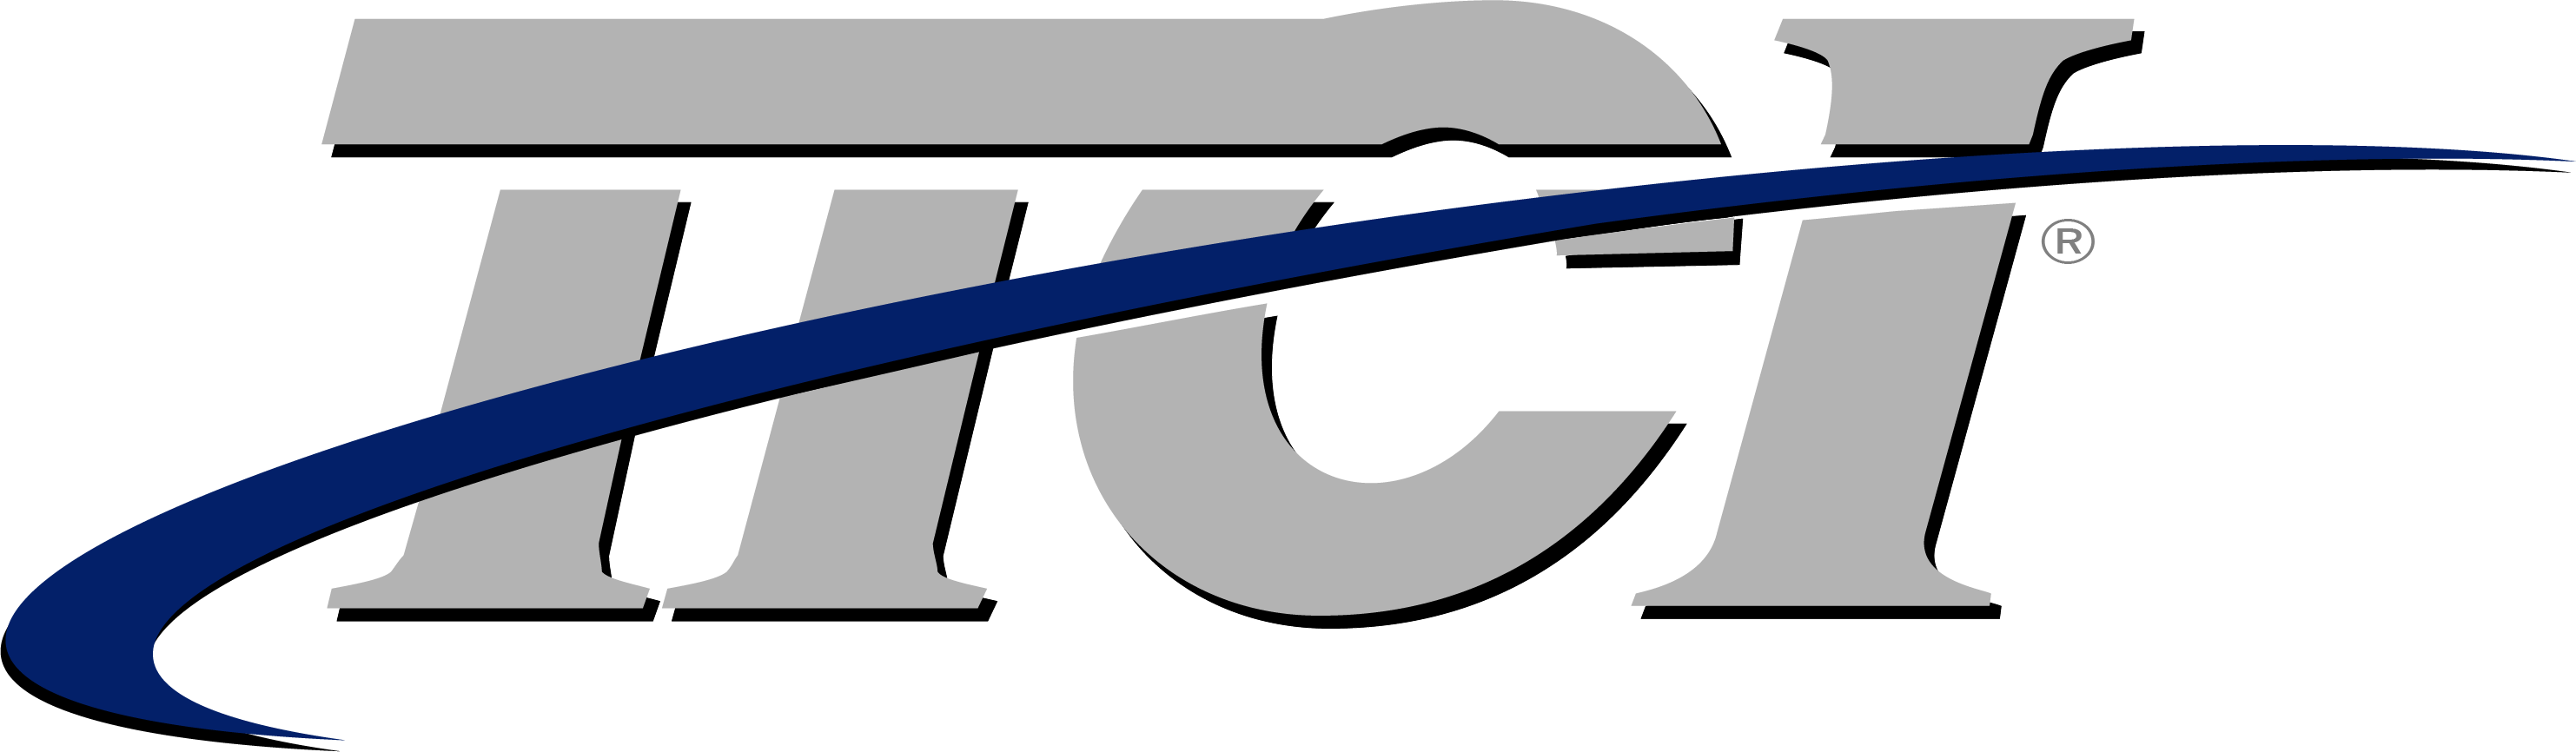 Ttci - Transportation Technology Center, Inc. (2965x866)